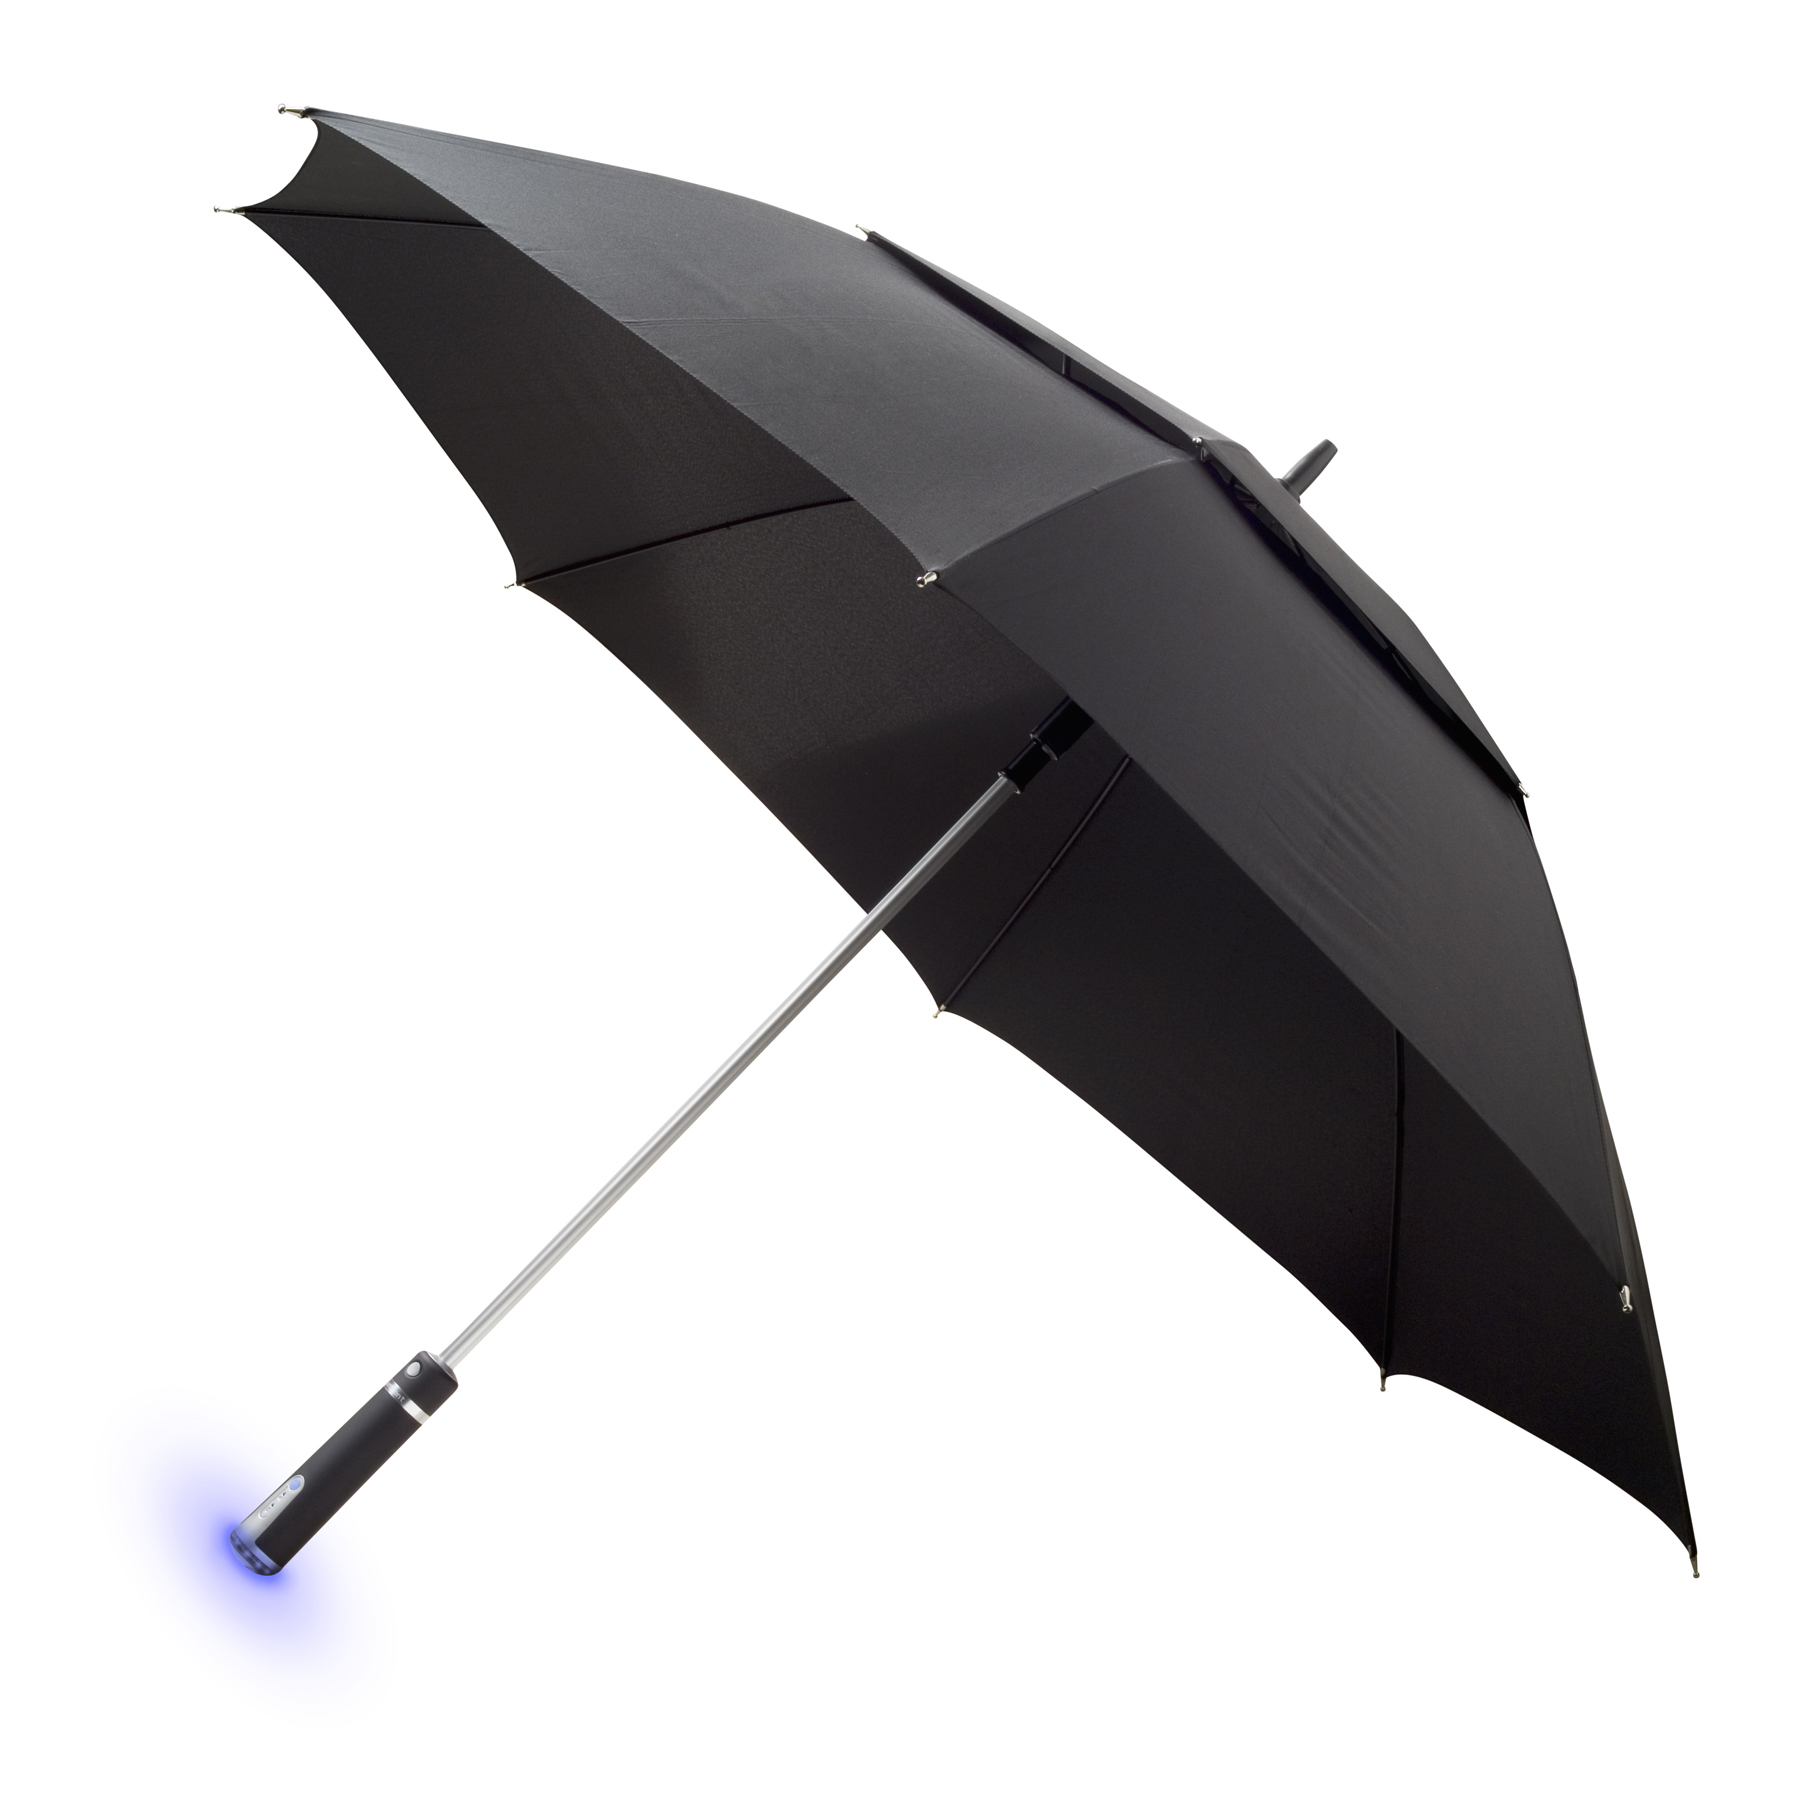 parapluie.jpg